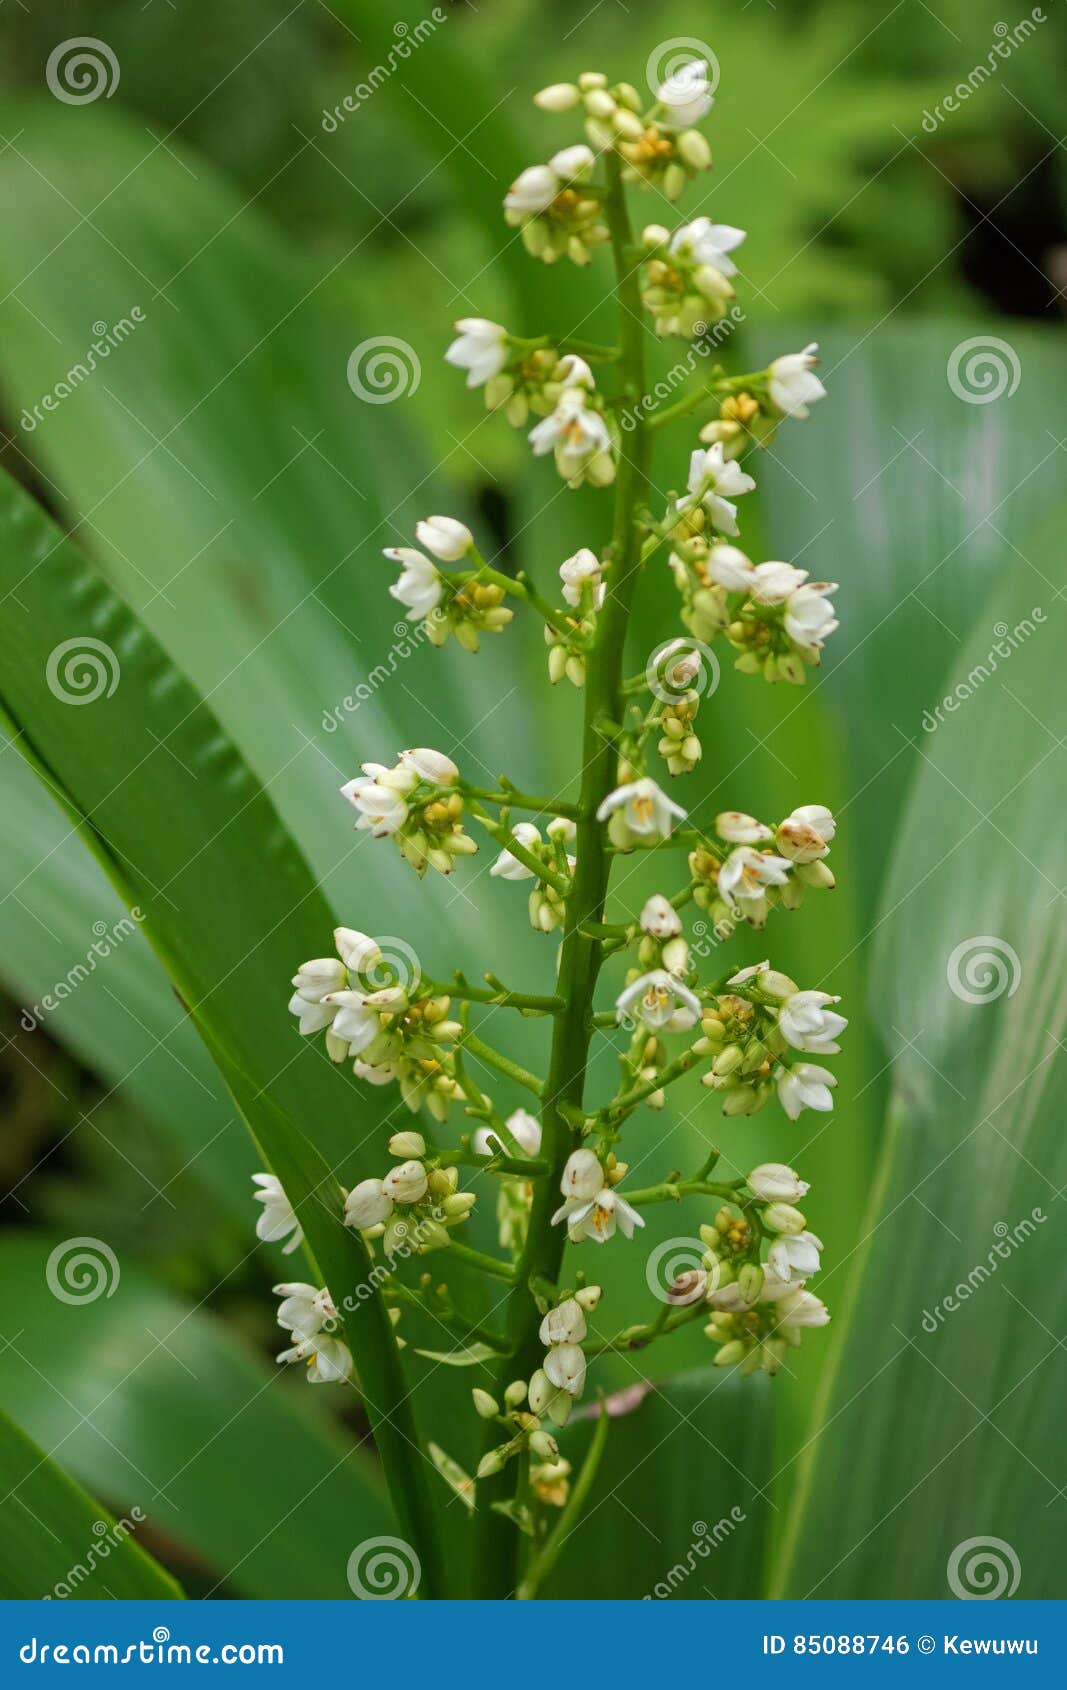 white herbal flower buds of xiphidium caeruleum aubl plant growing in singapore.